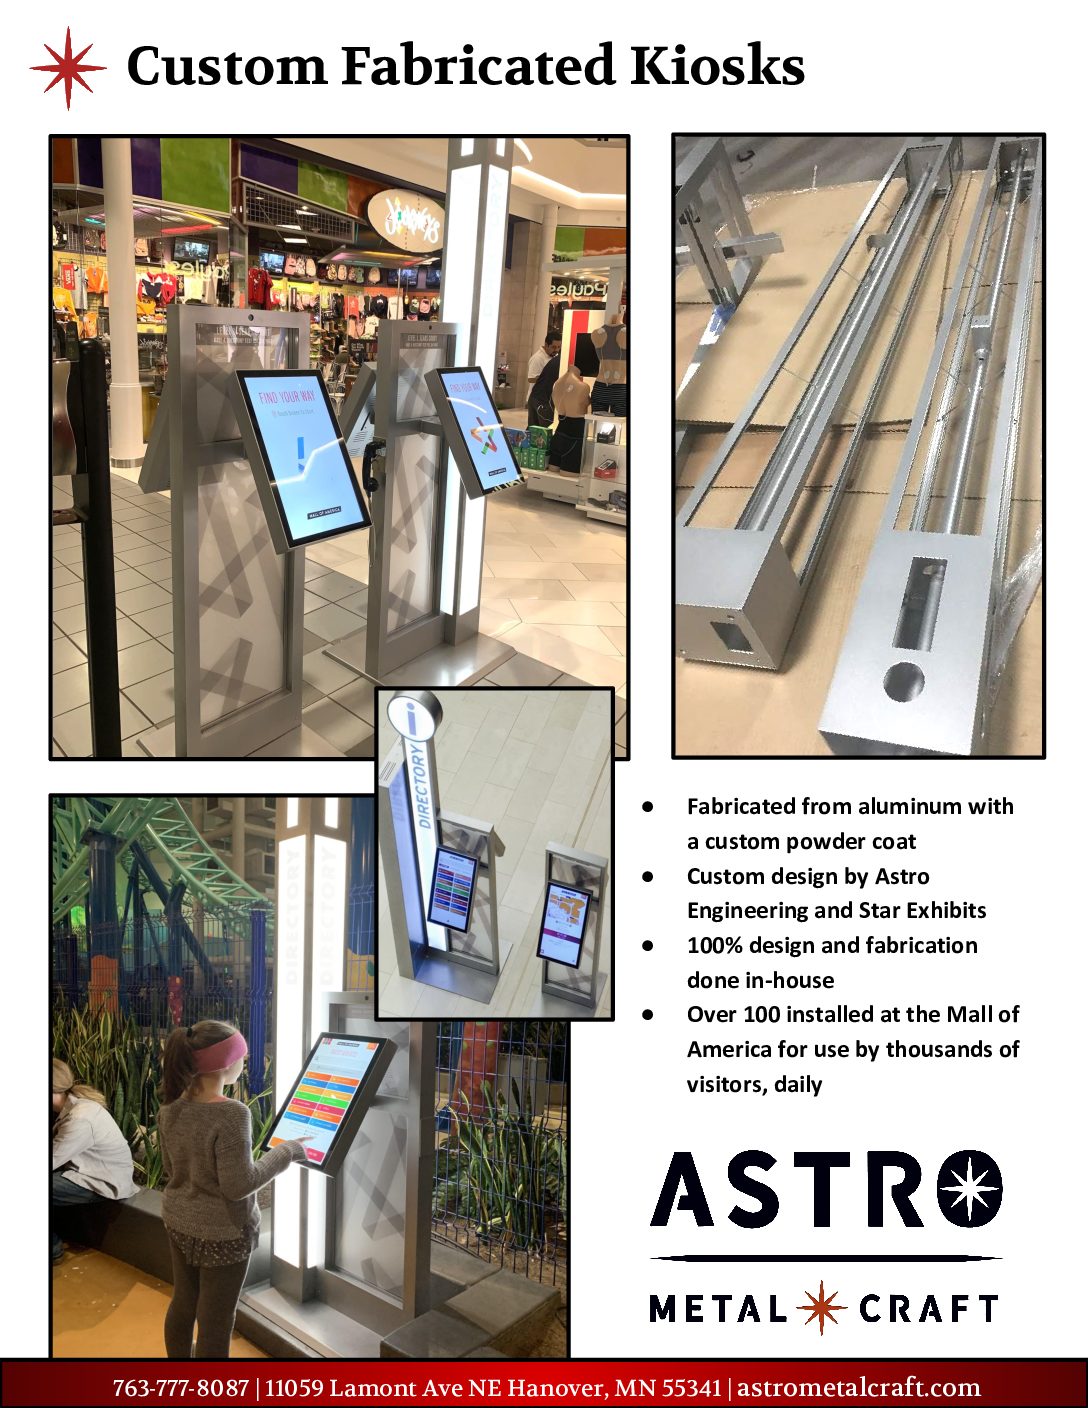 Astro Metal Craft – Custom Fabricated Kiosks Line Card